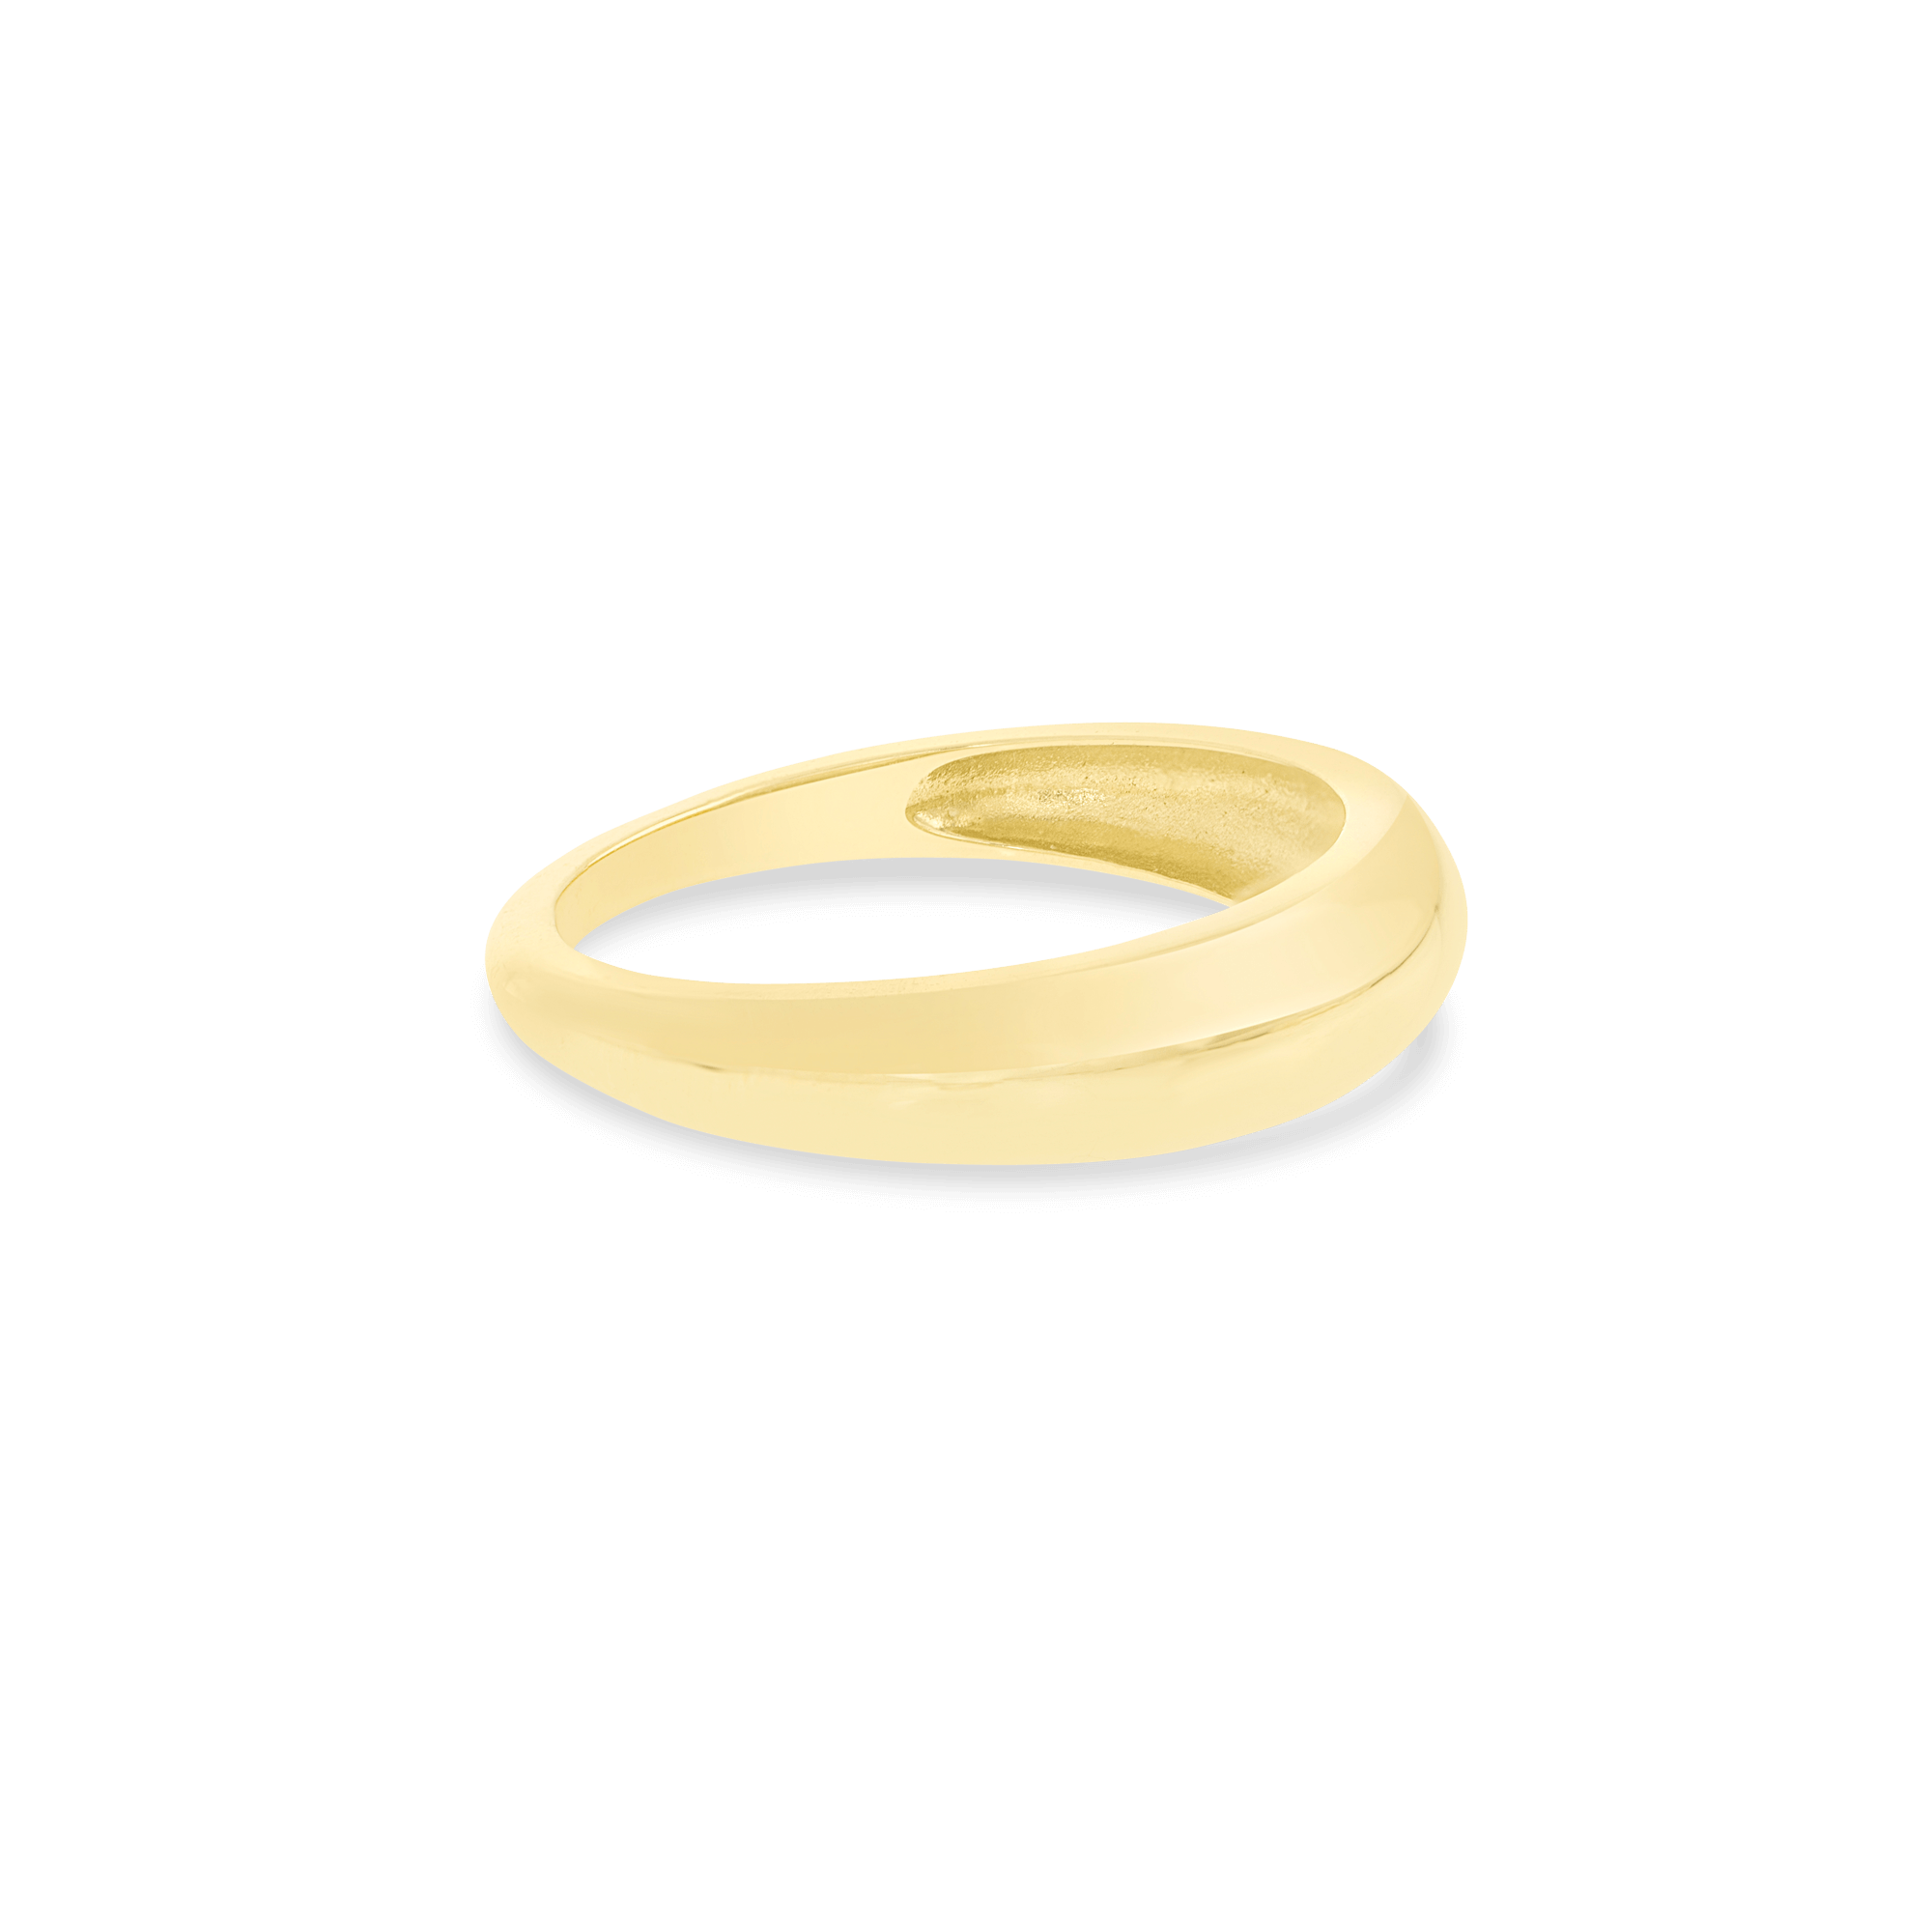 tanishq jewellery rings designs